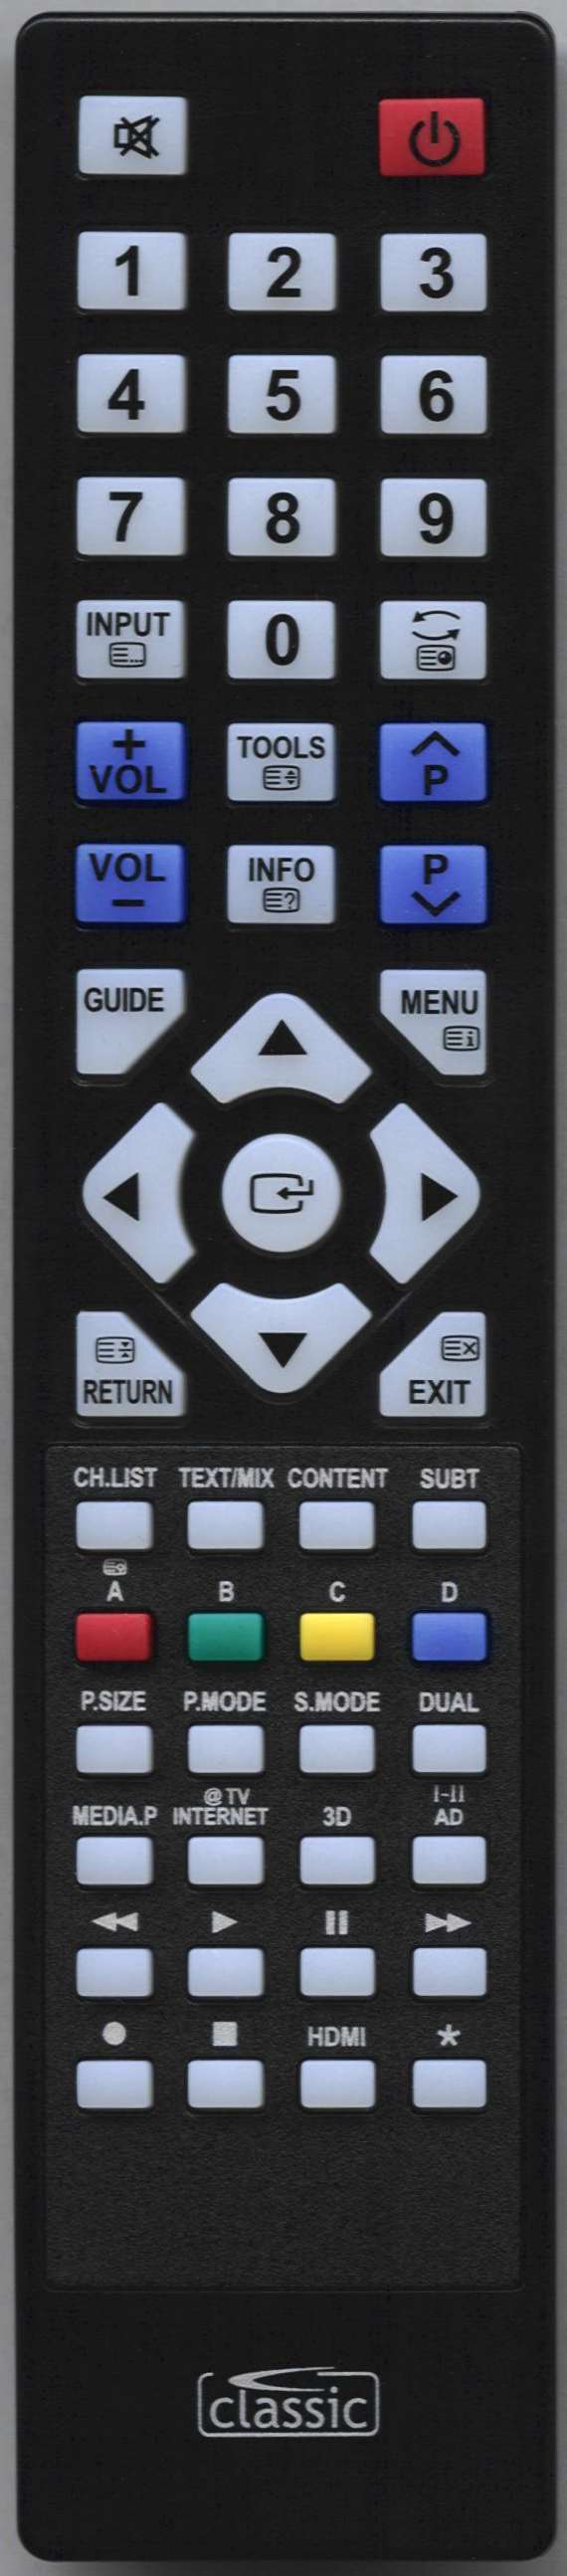 SAMSUNG PS58C6500TWXZG Remote Control